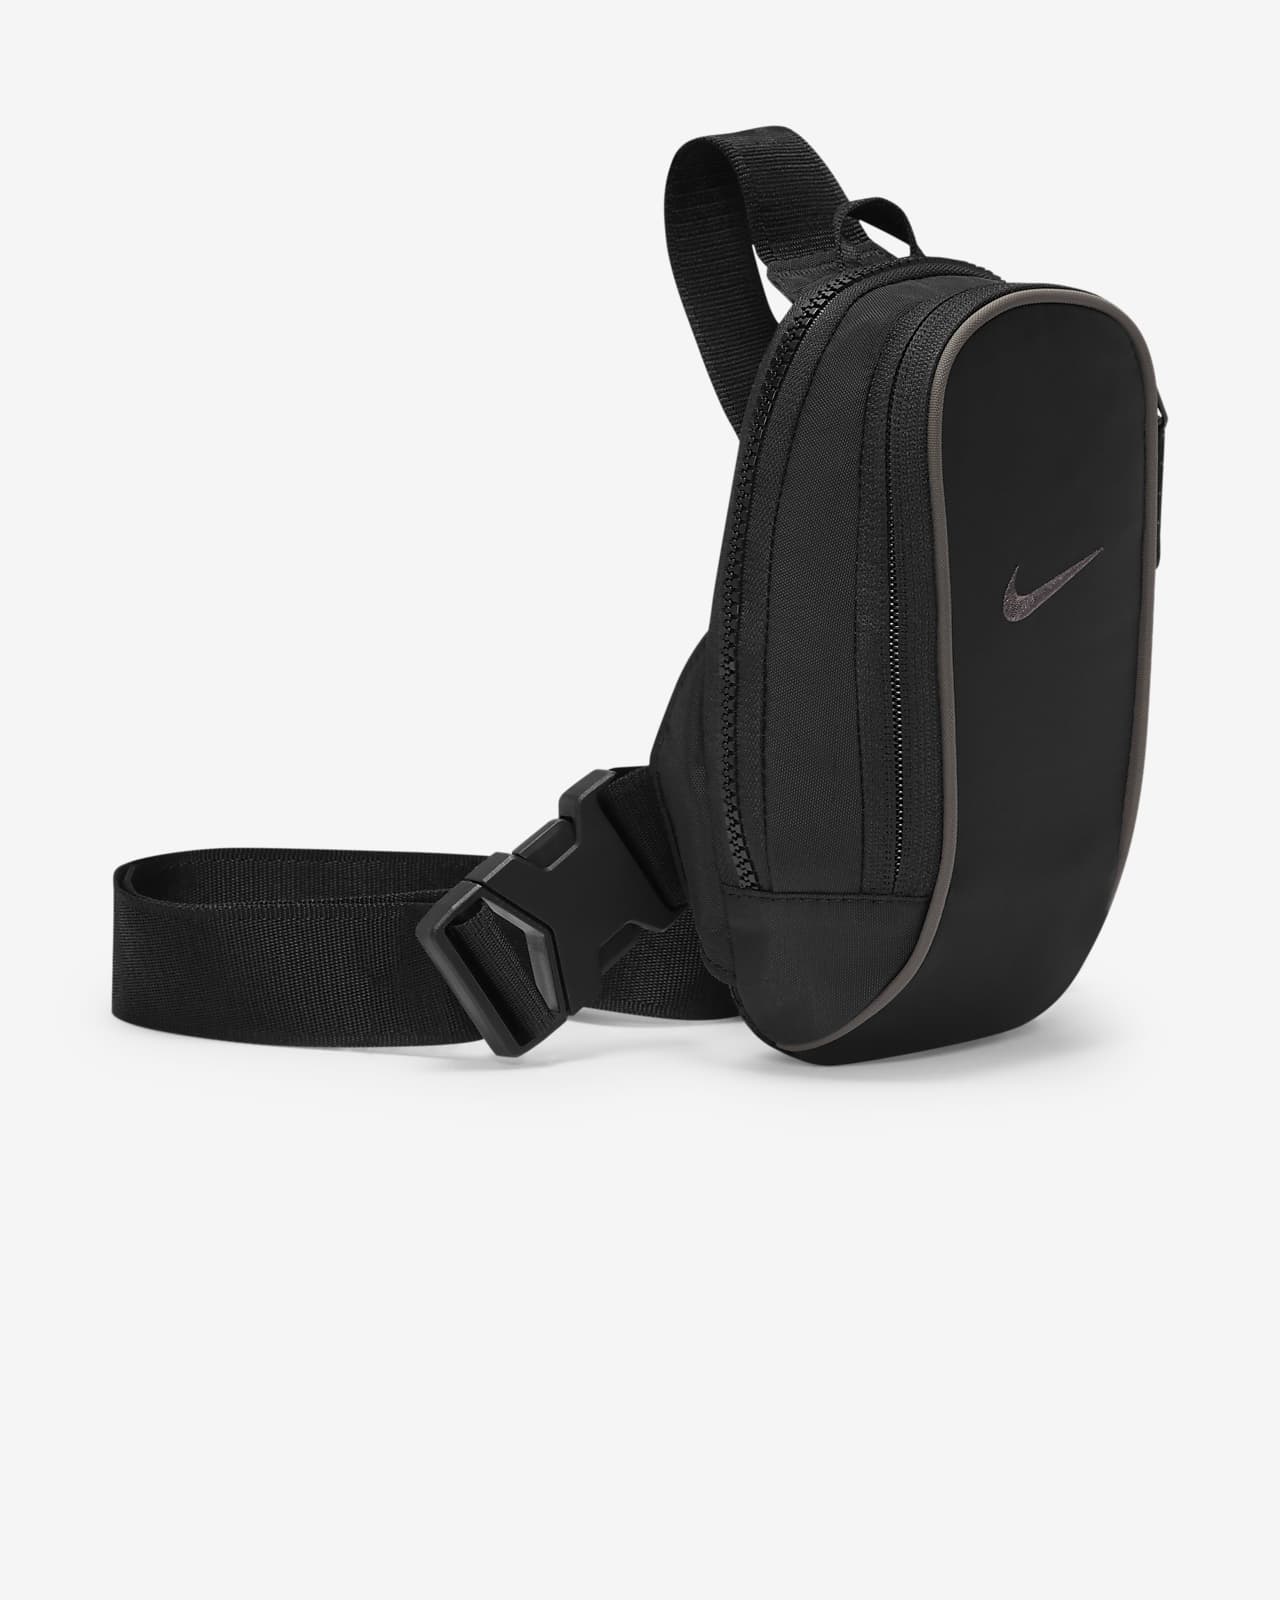 Nike Sportswear ESSENTIALS UNISEX - Across body bag -  sanddrift/sail/baroque brown/sand - Zalando.de